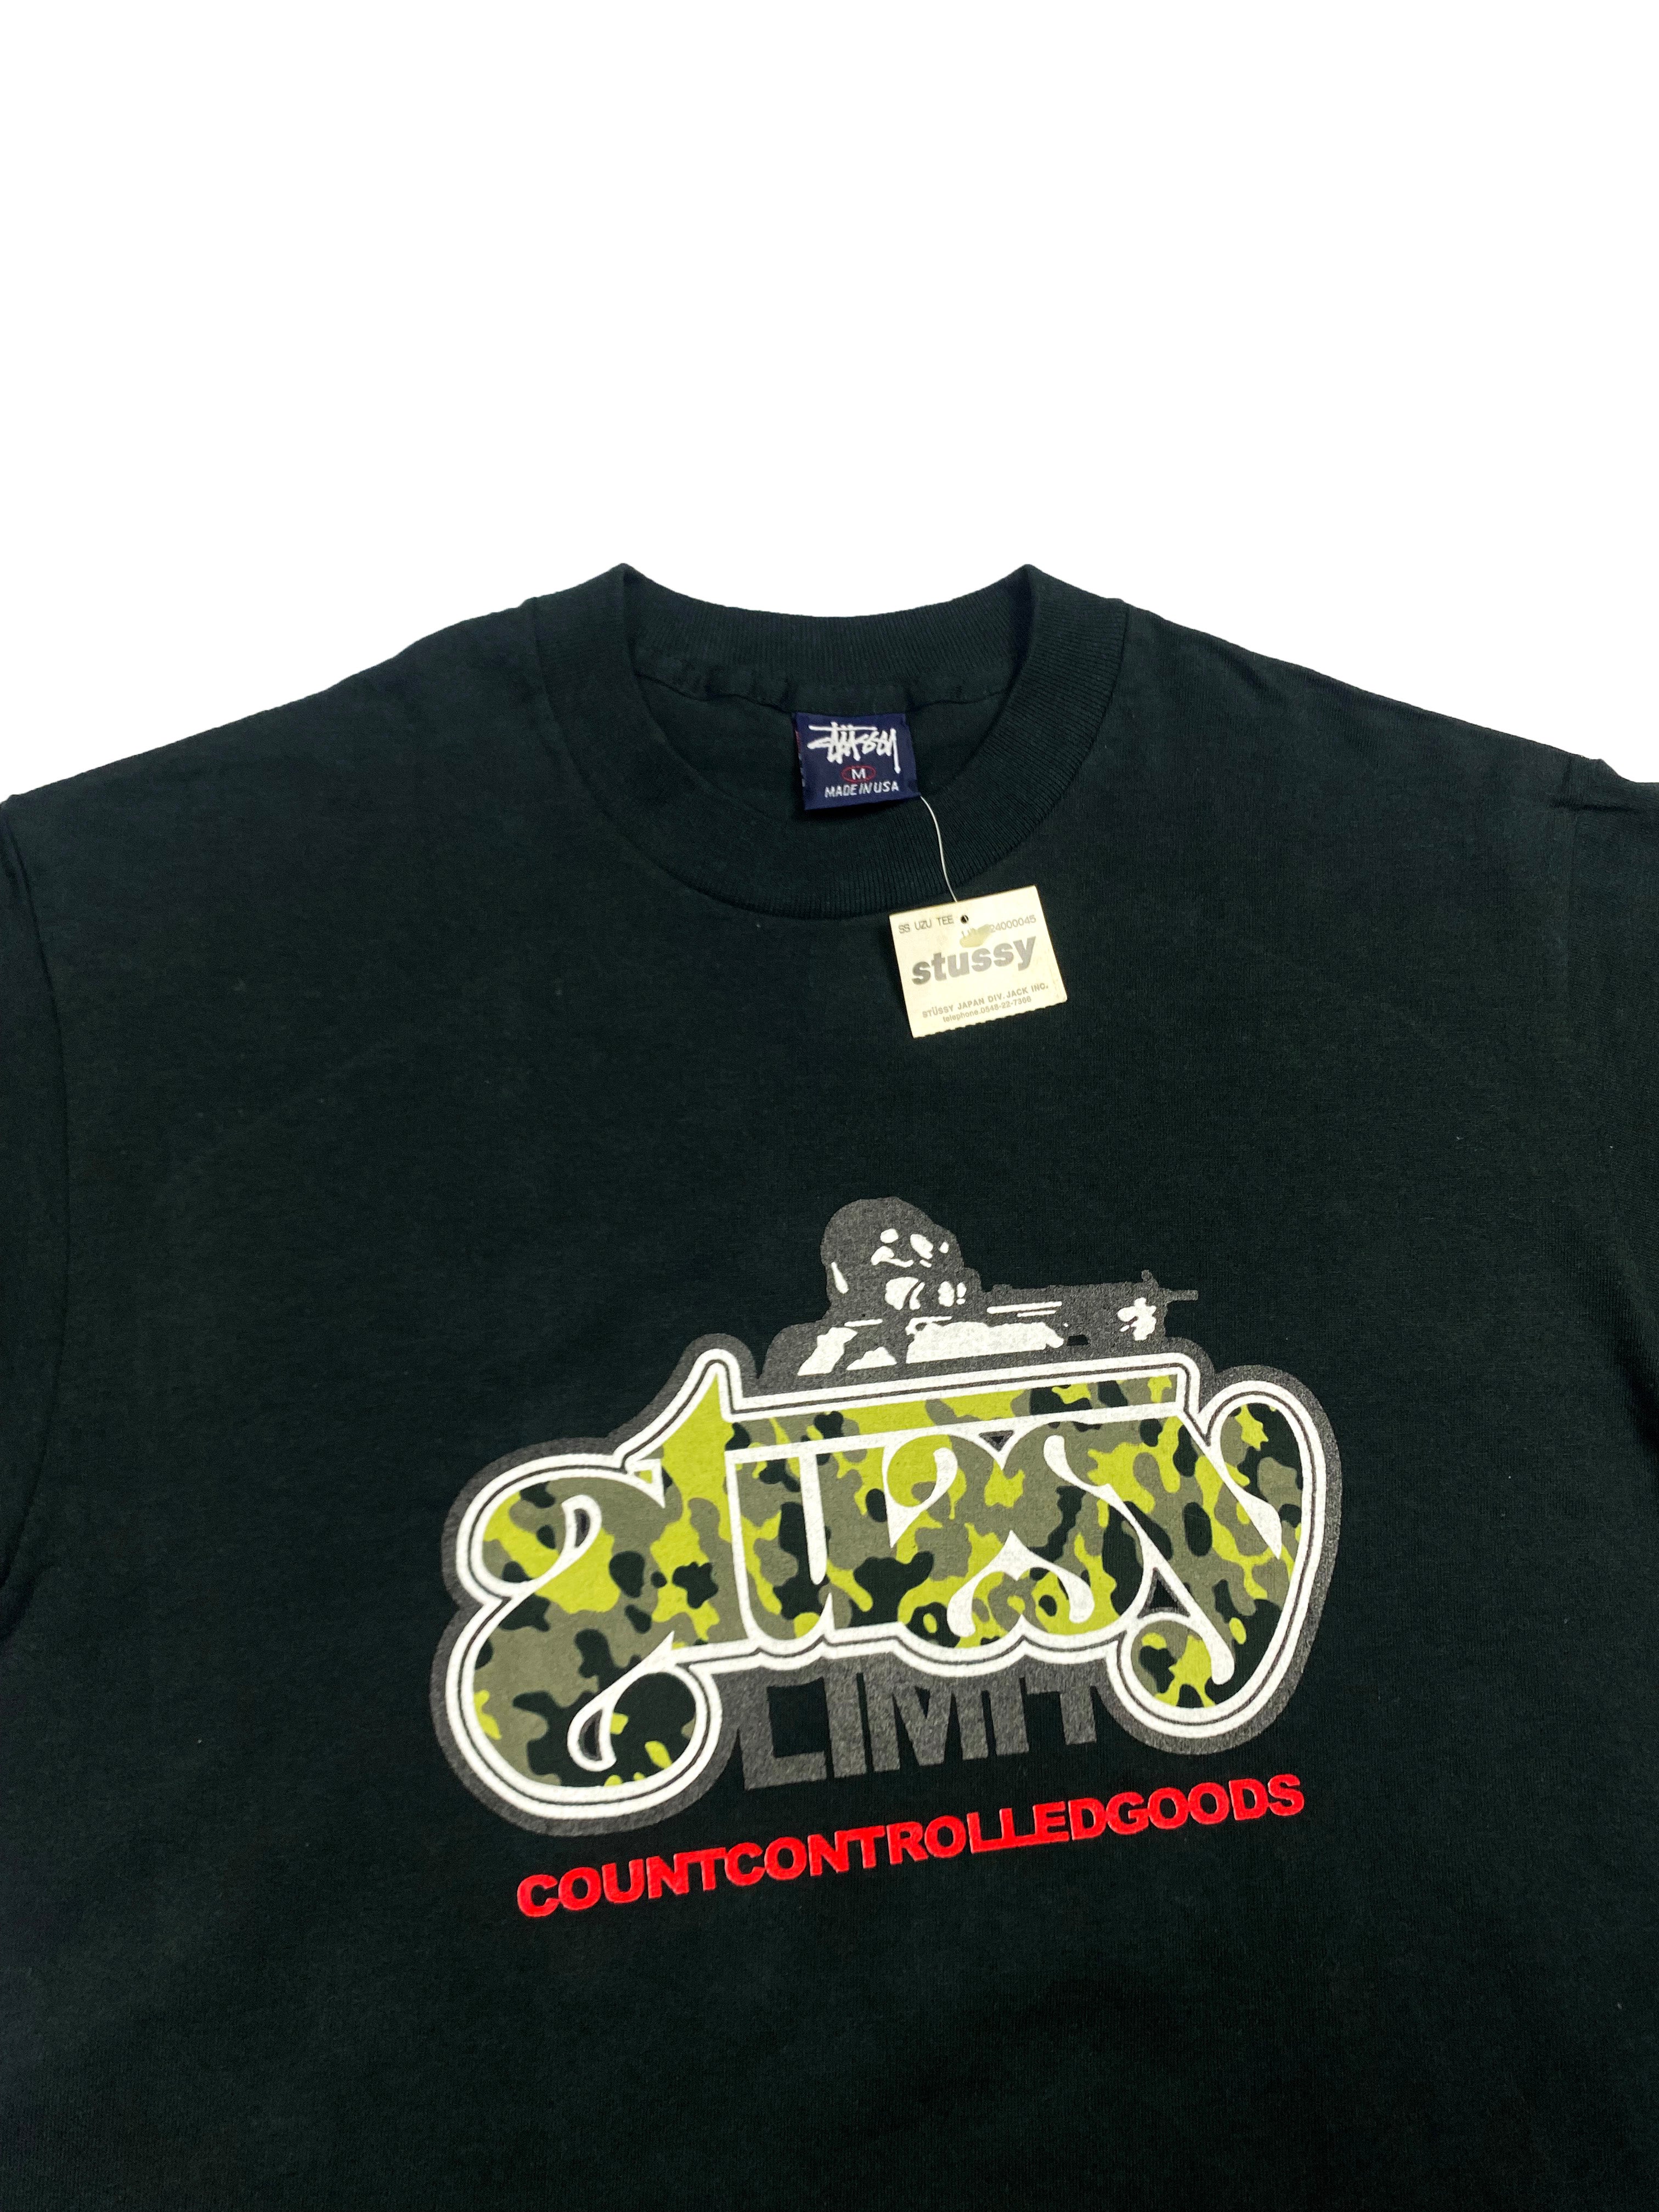 Stussy 'Countcotrolledgoods' T-shirt BNWT 90's